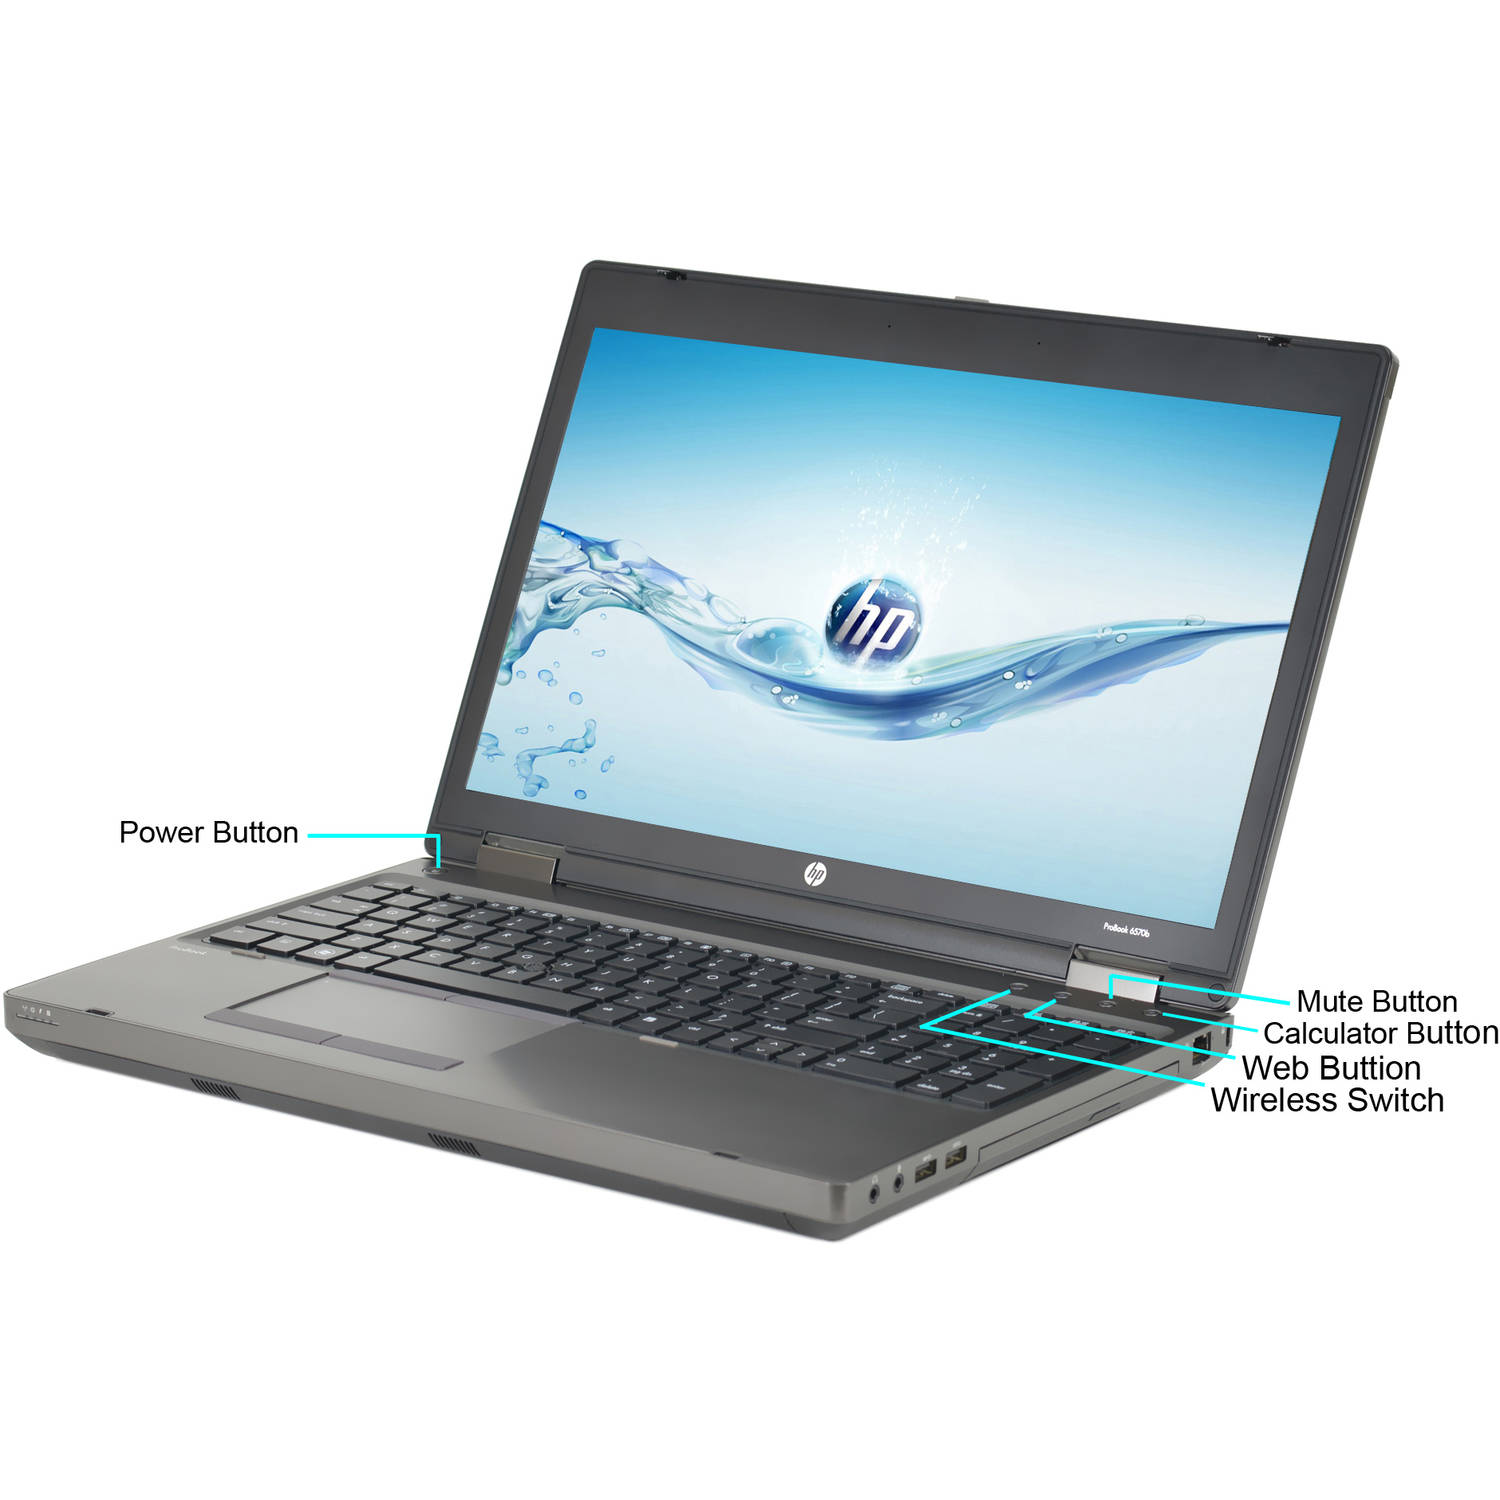 HP 15.6" ProBook 6570B WA5-0879 Laptop PC with Intel Core i5-3210M Processor, 12GB Memory, 750GB Hard Drive and Windows 10 Pro (Refurbished) - image 3 of 5